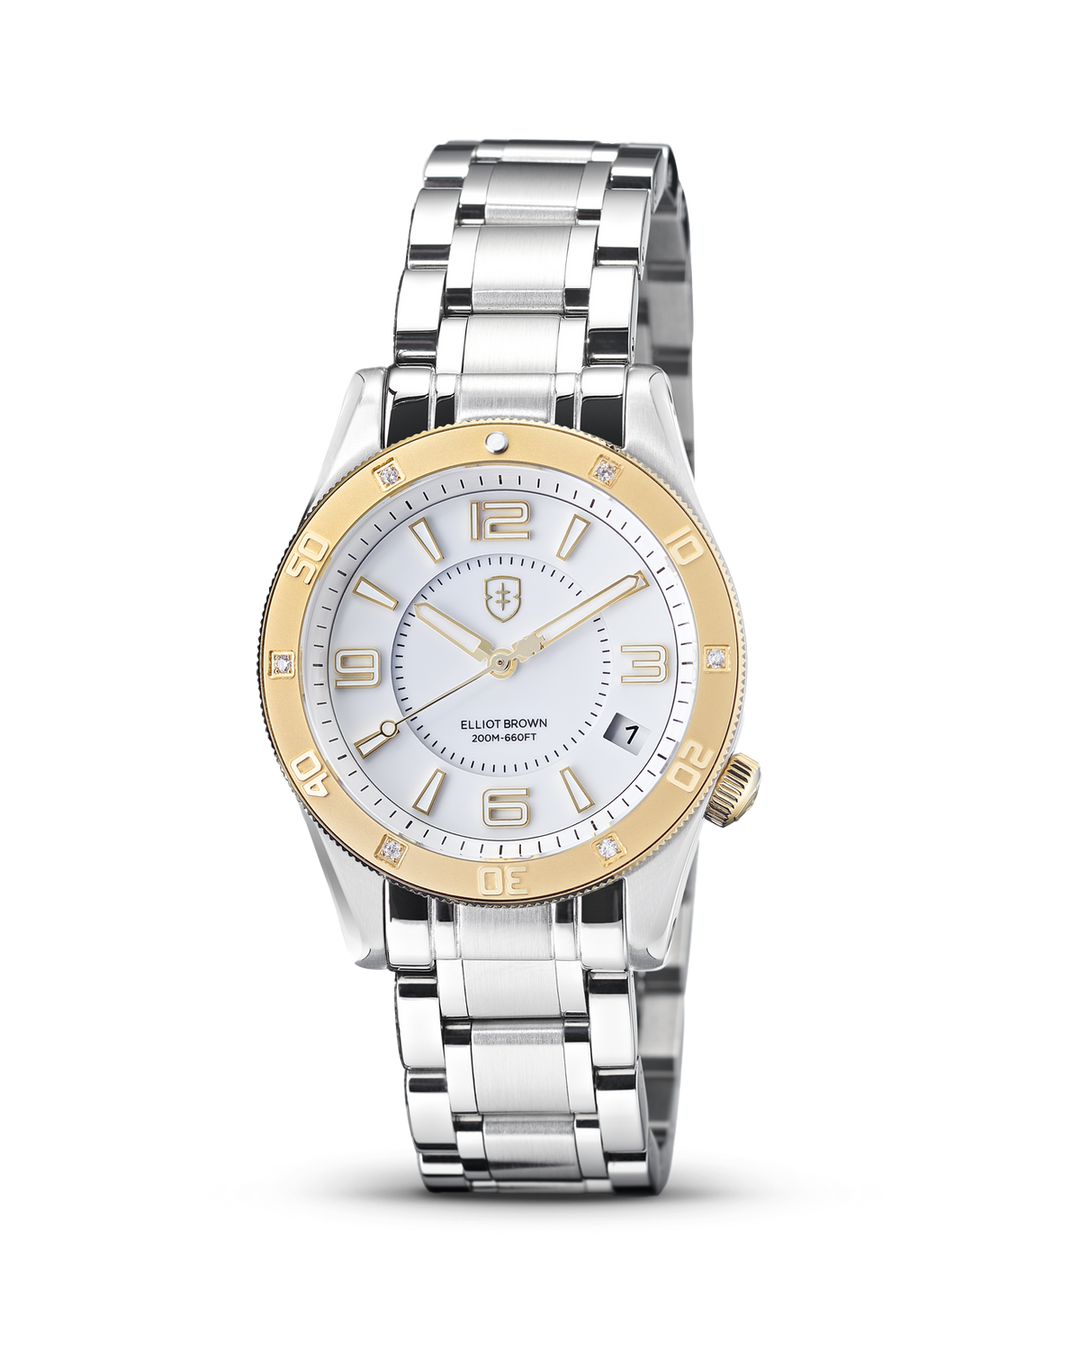 Lady's Elliot Brown Bloxworth Hali Quartz watch Model 929-204-B60